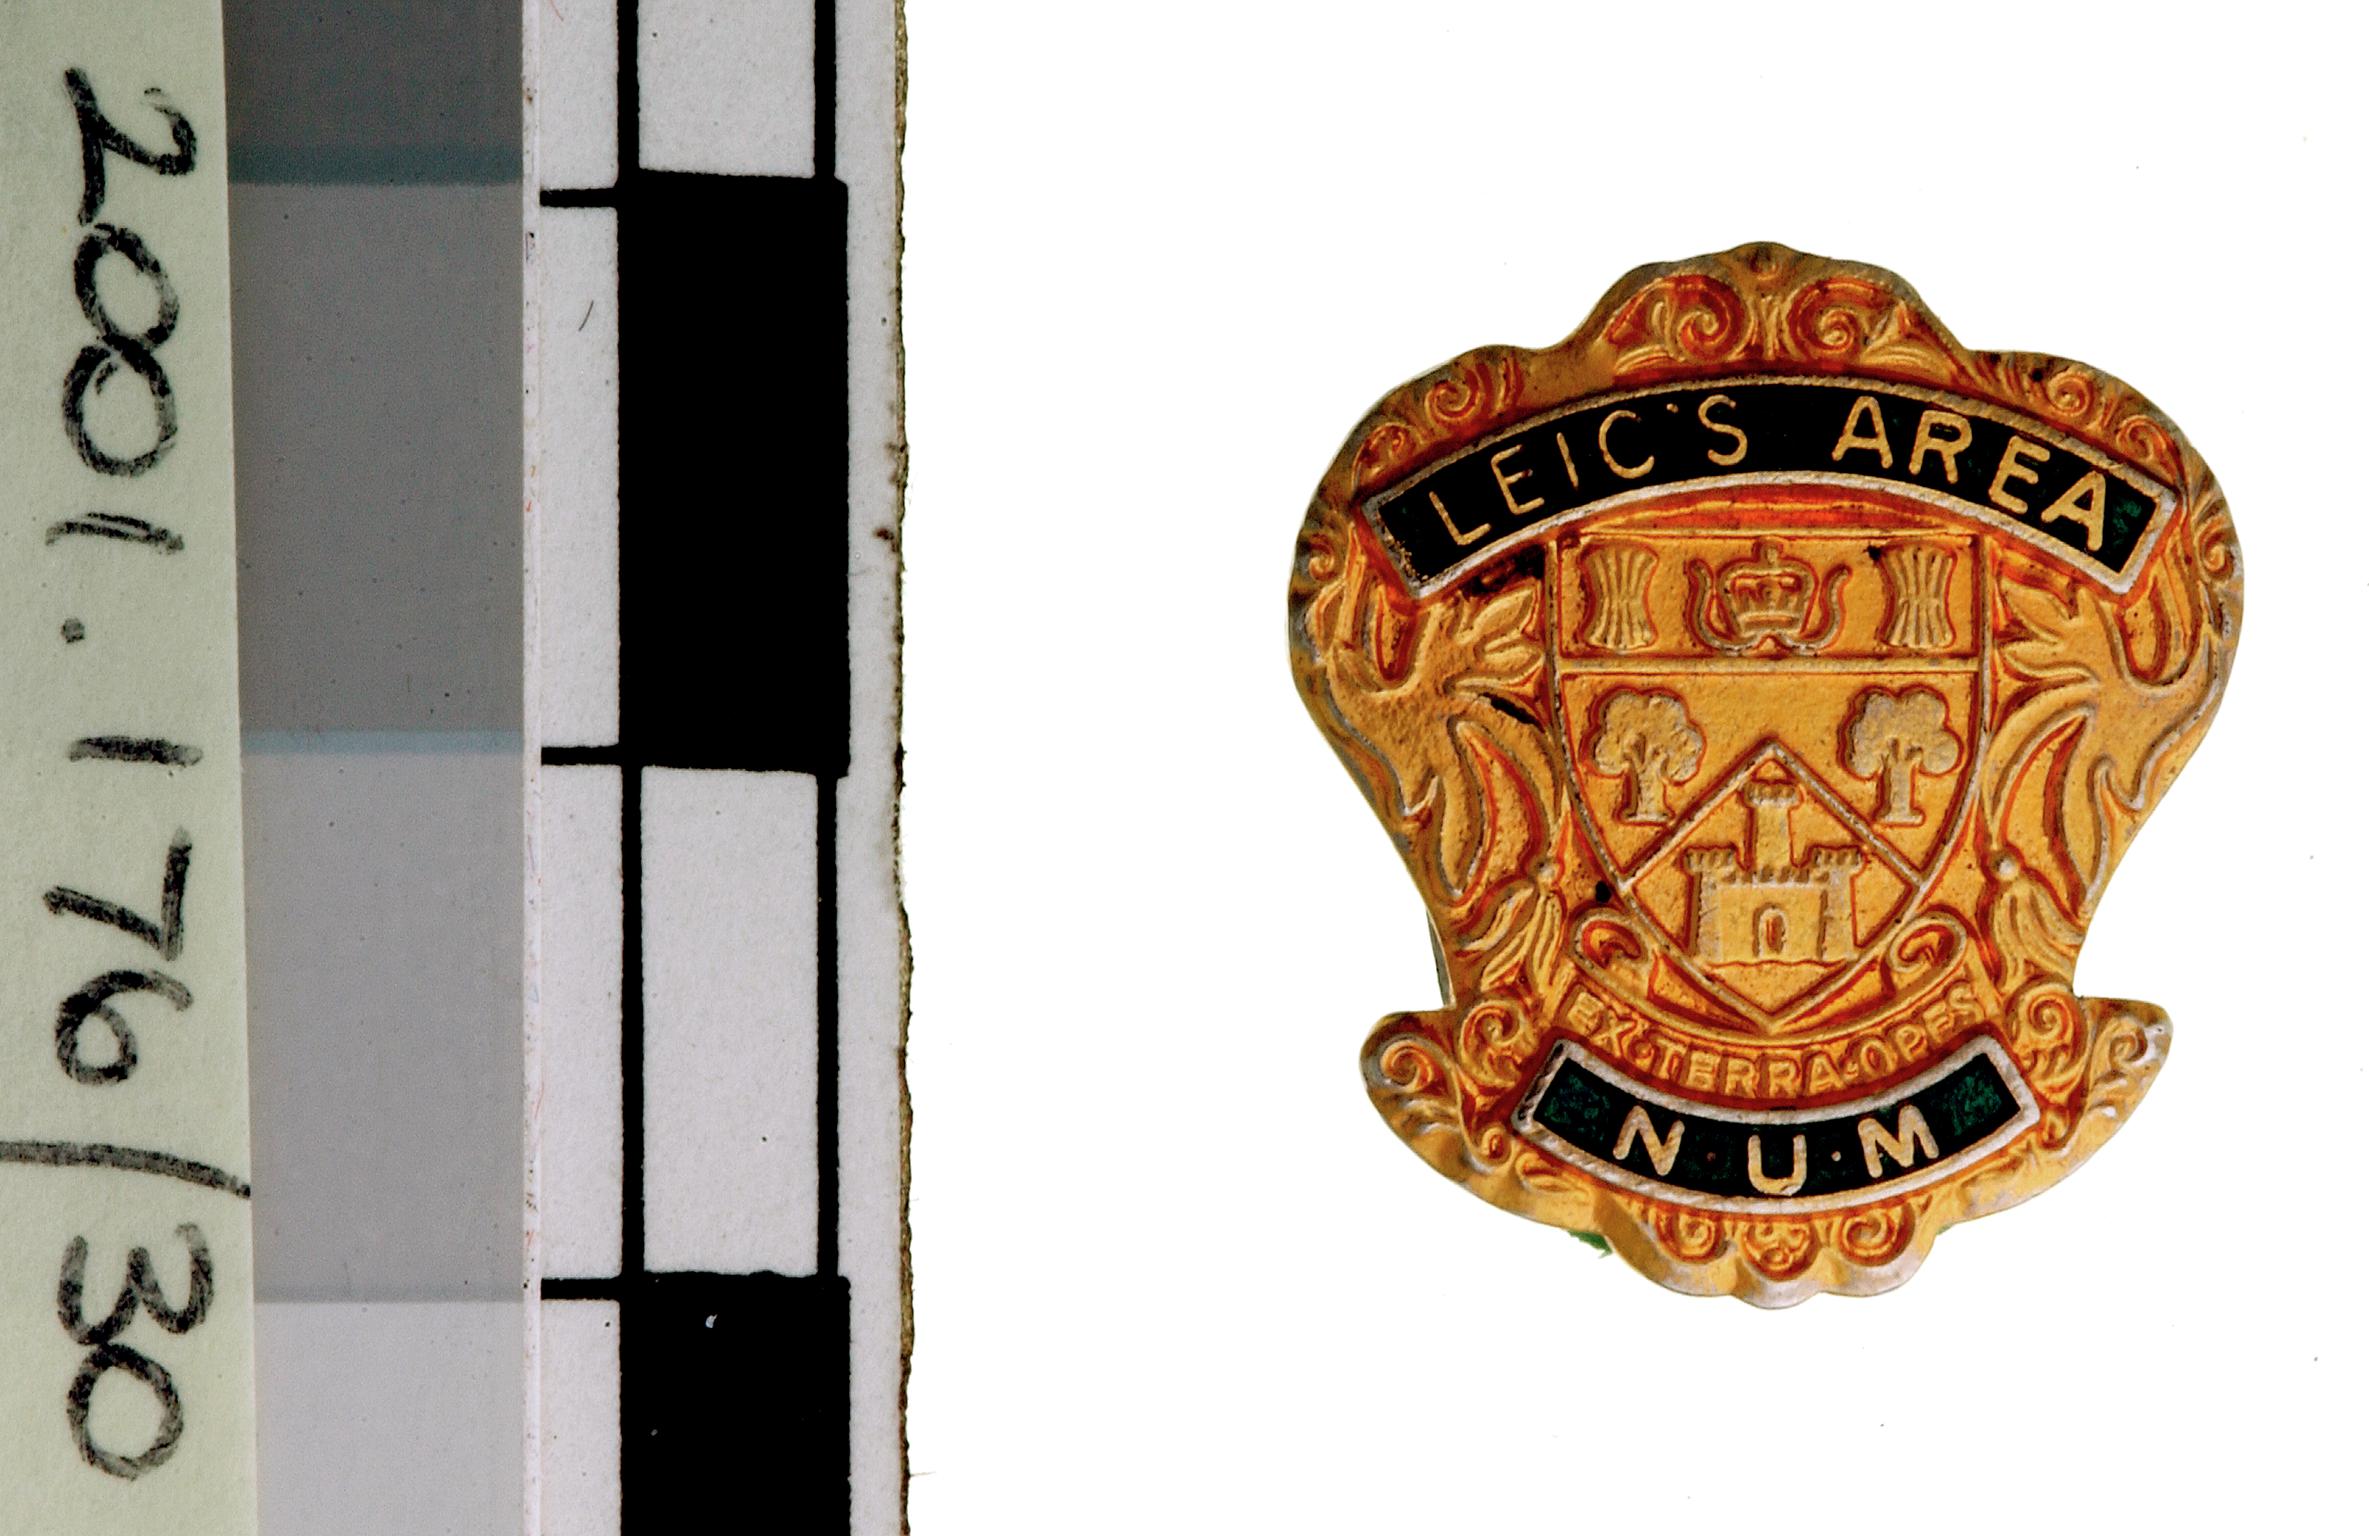 N.U.M. Leic's Area, badge